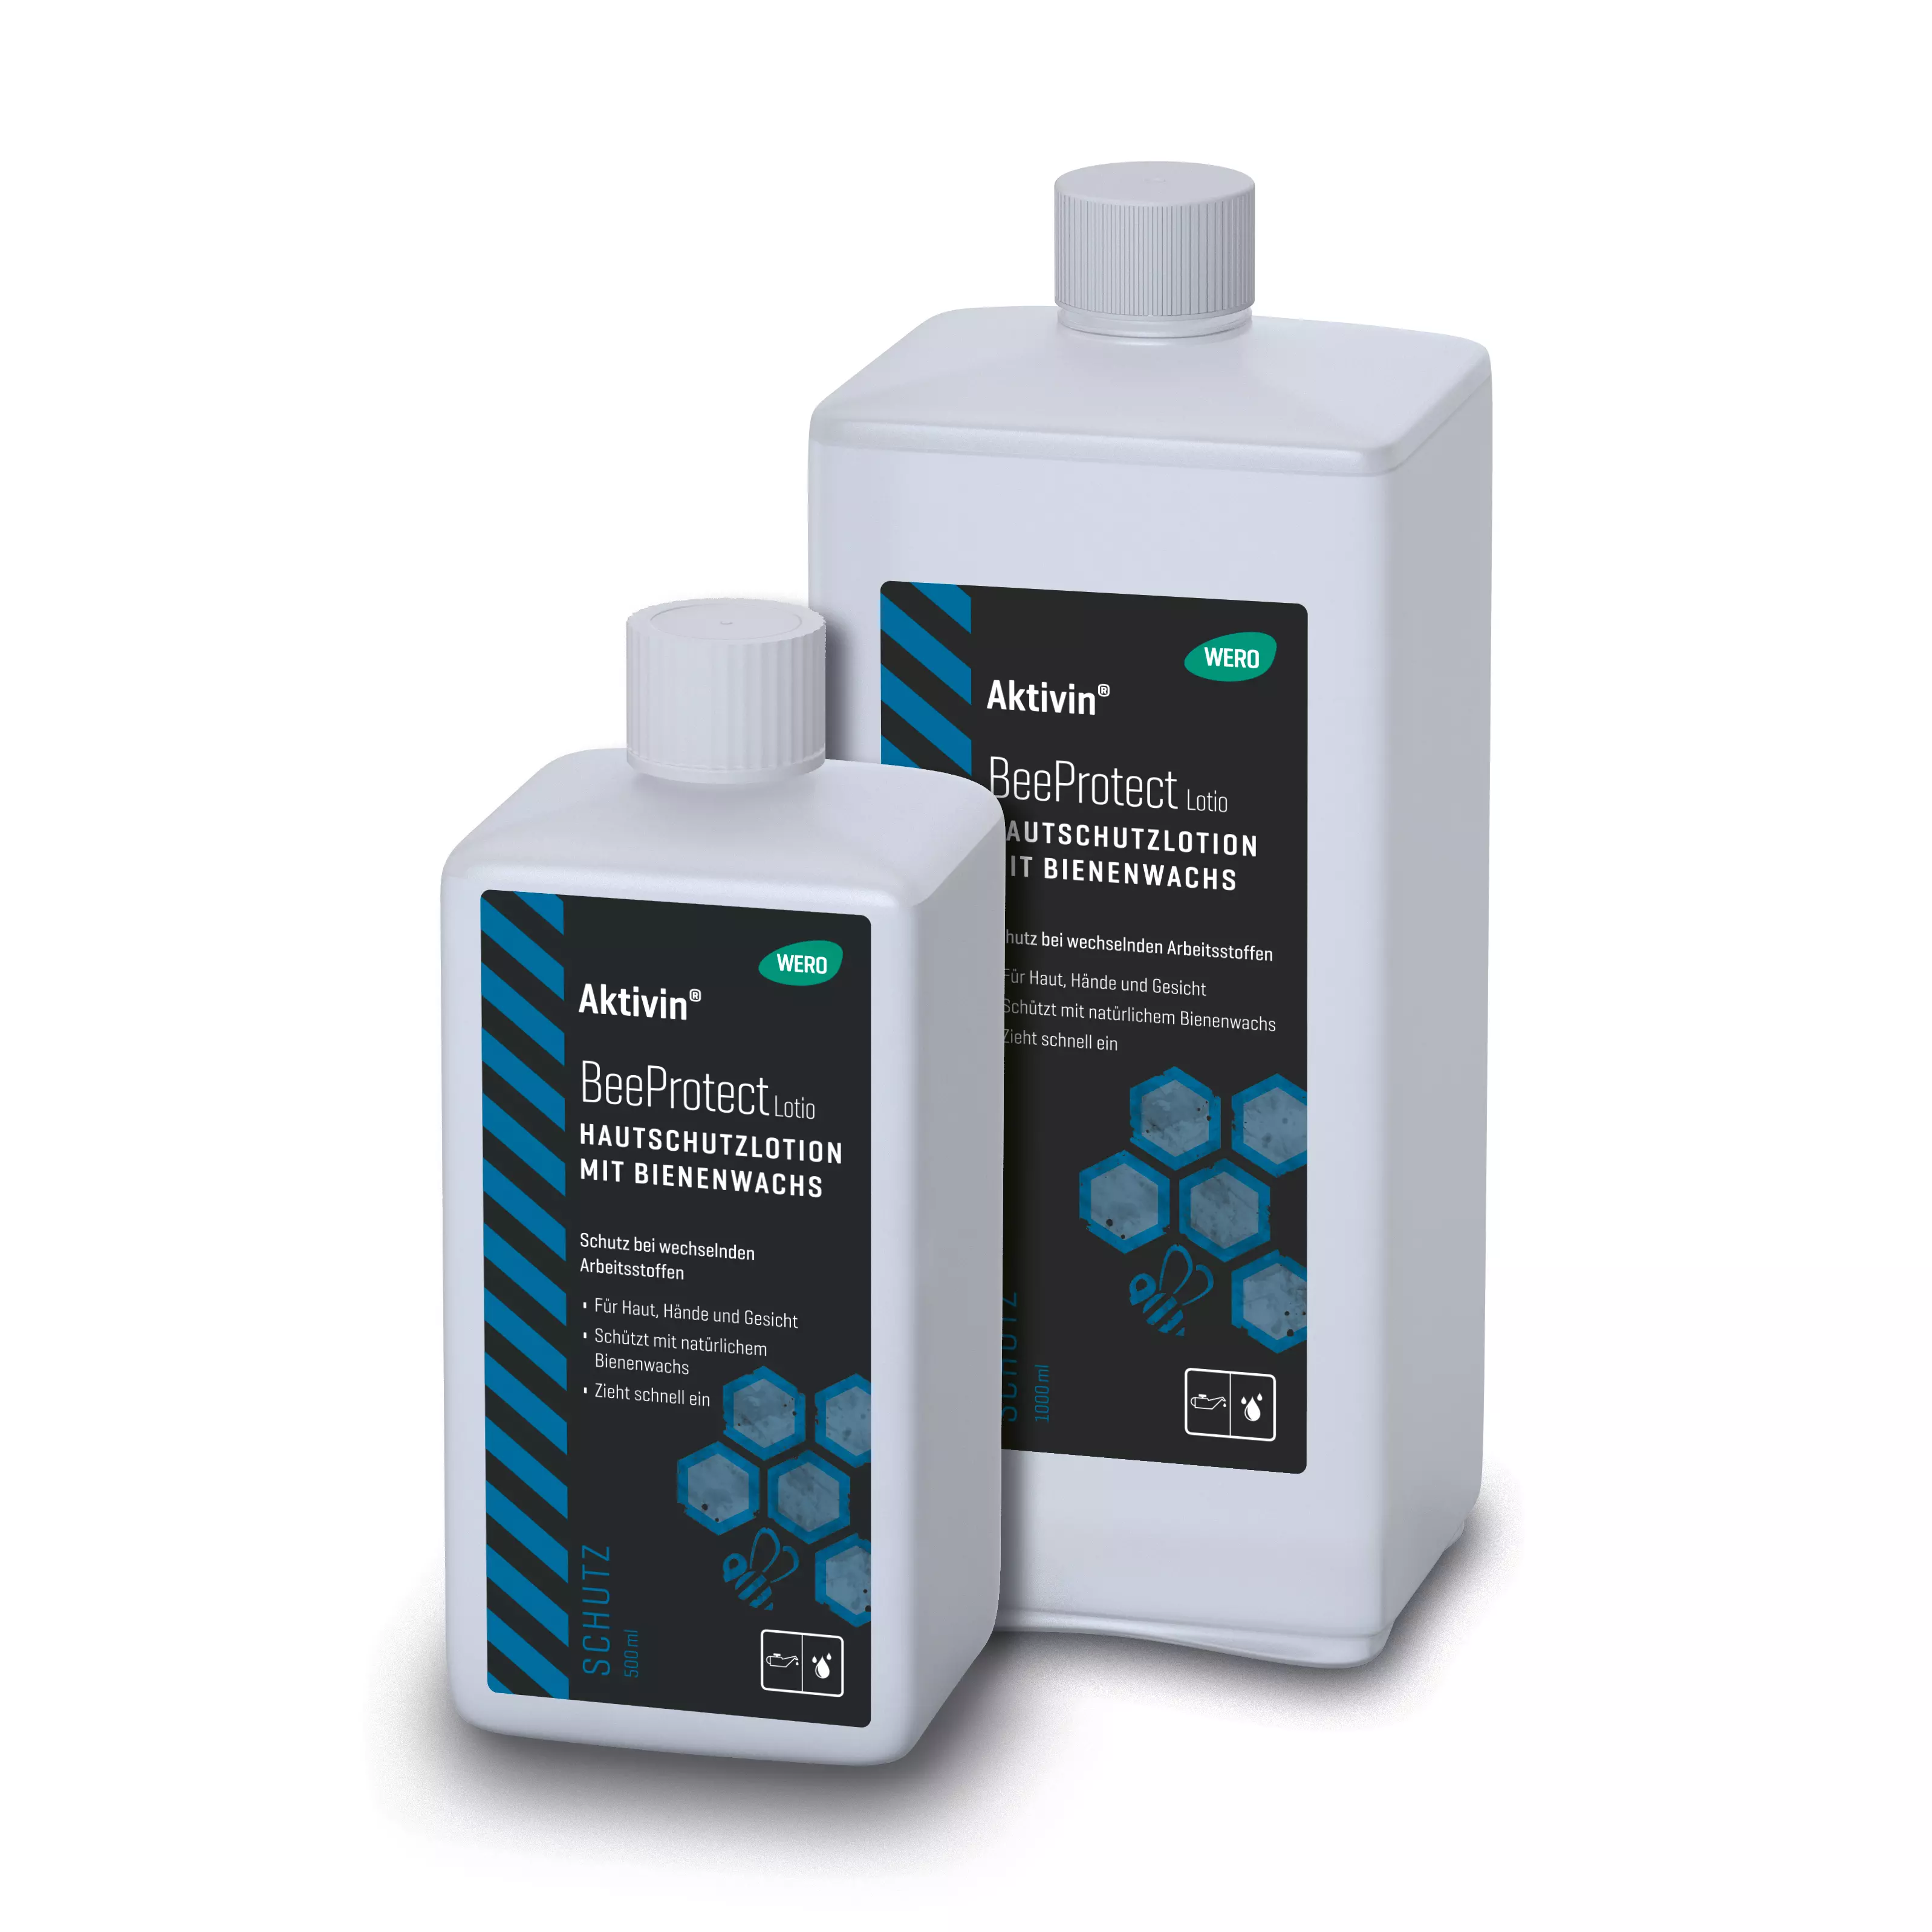 Hautschutzlotion Aktivin® BeeProtect Lotio - Euroflasche, 1.000 ml